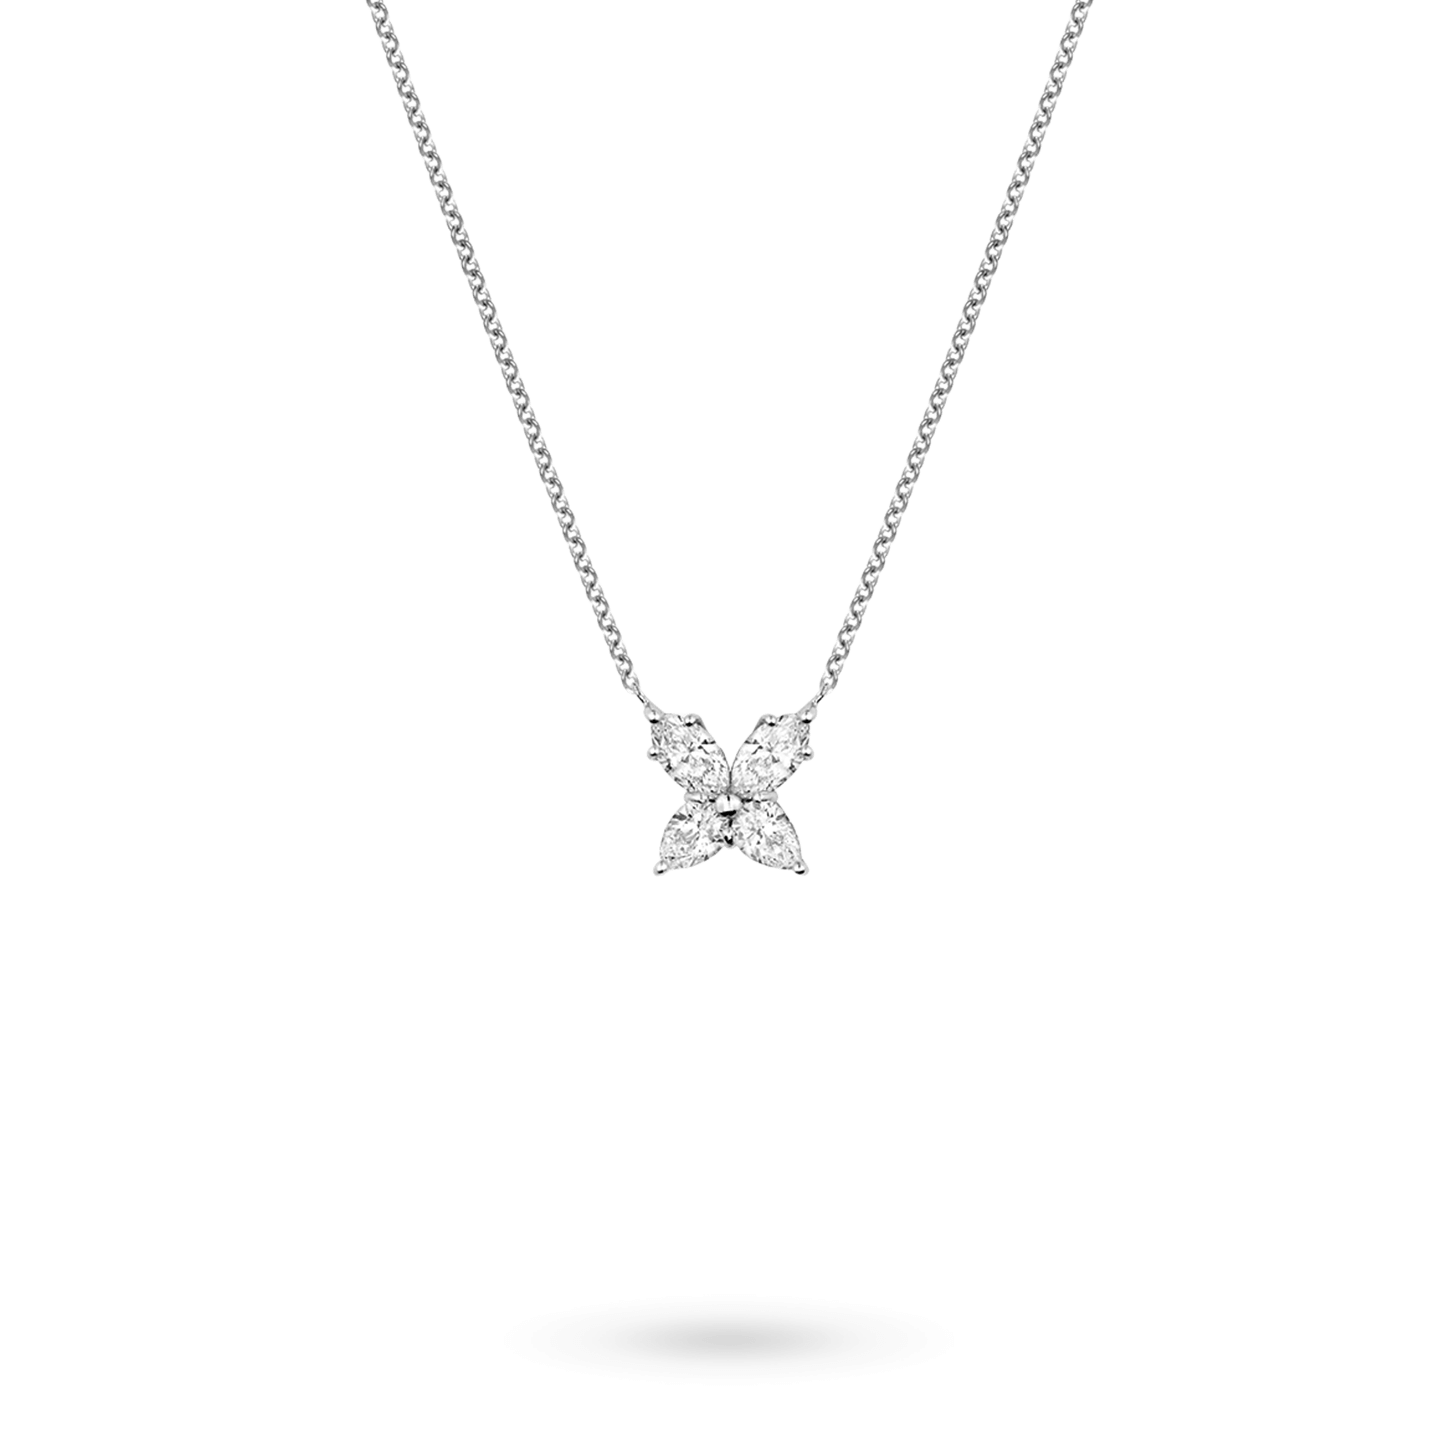 Marquesa Diamond Pendant, Product Image 2